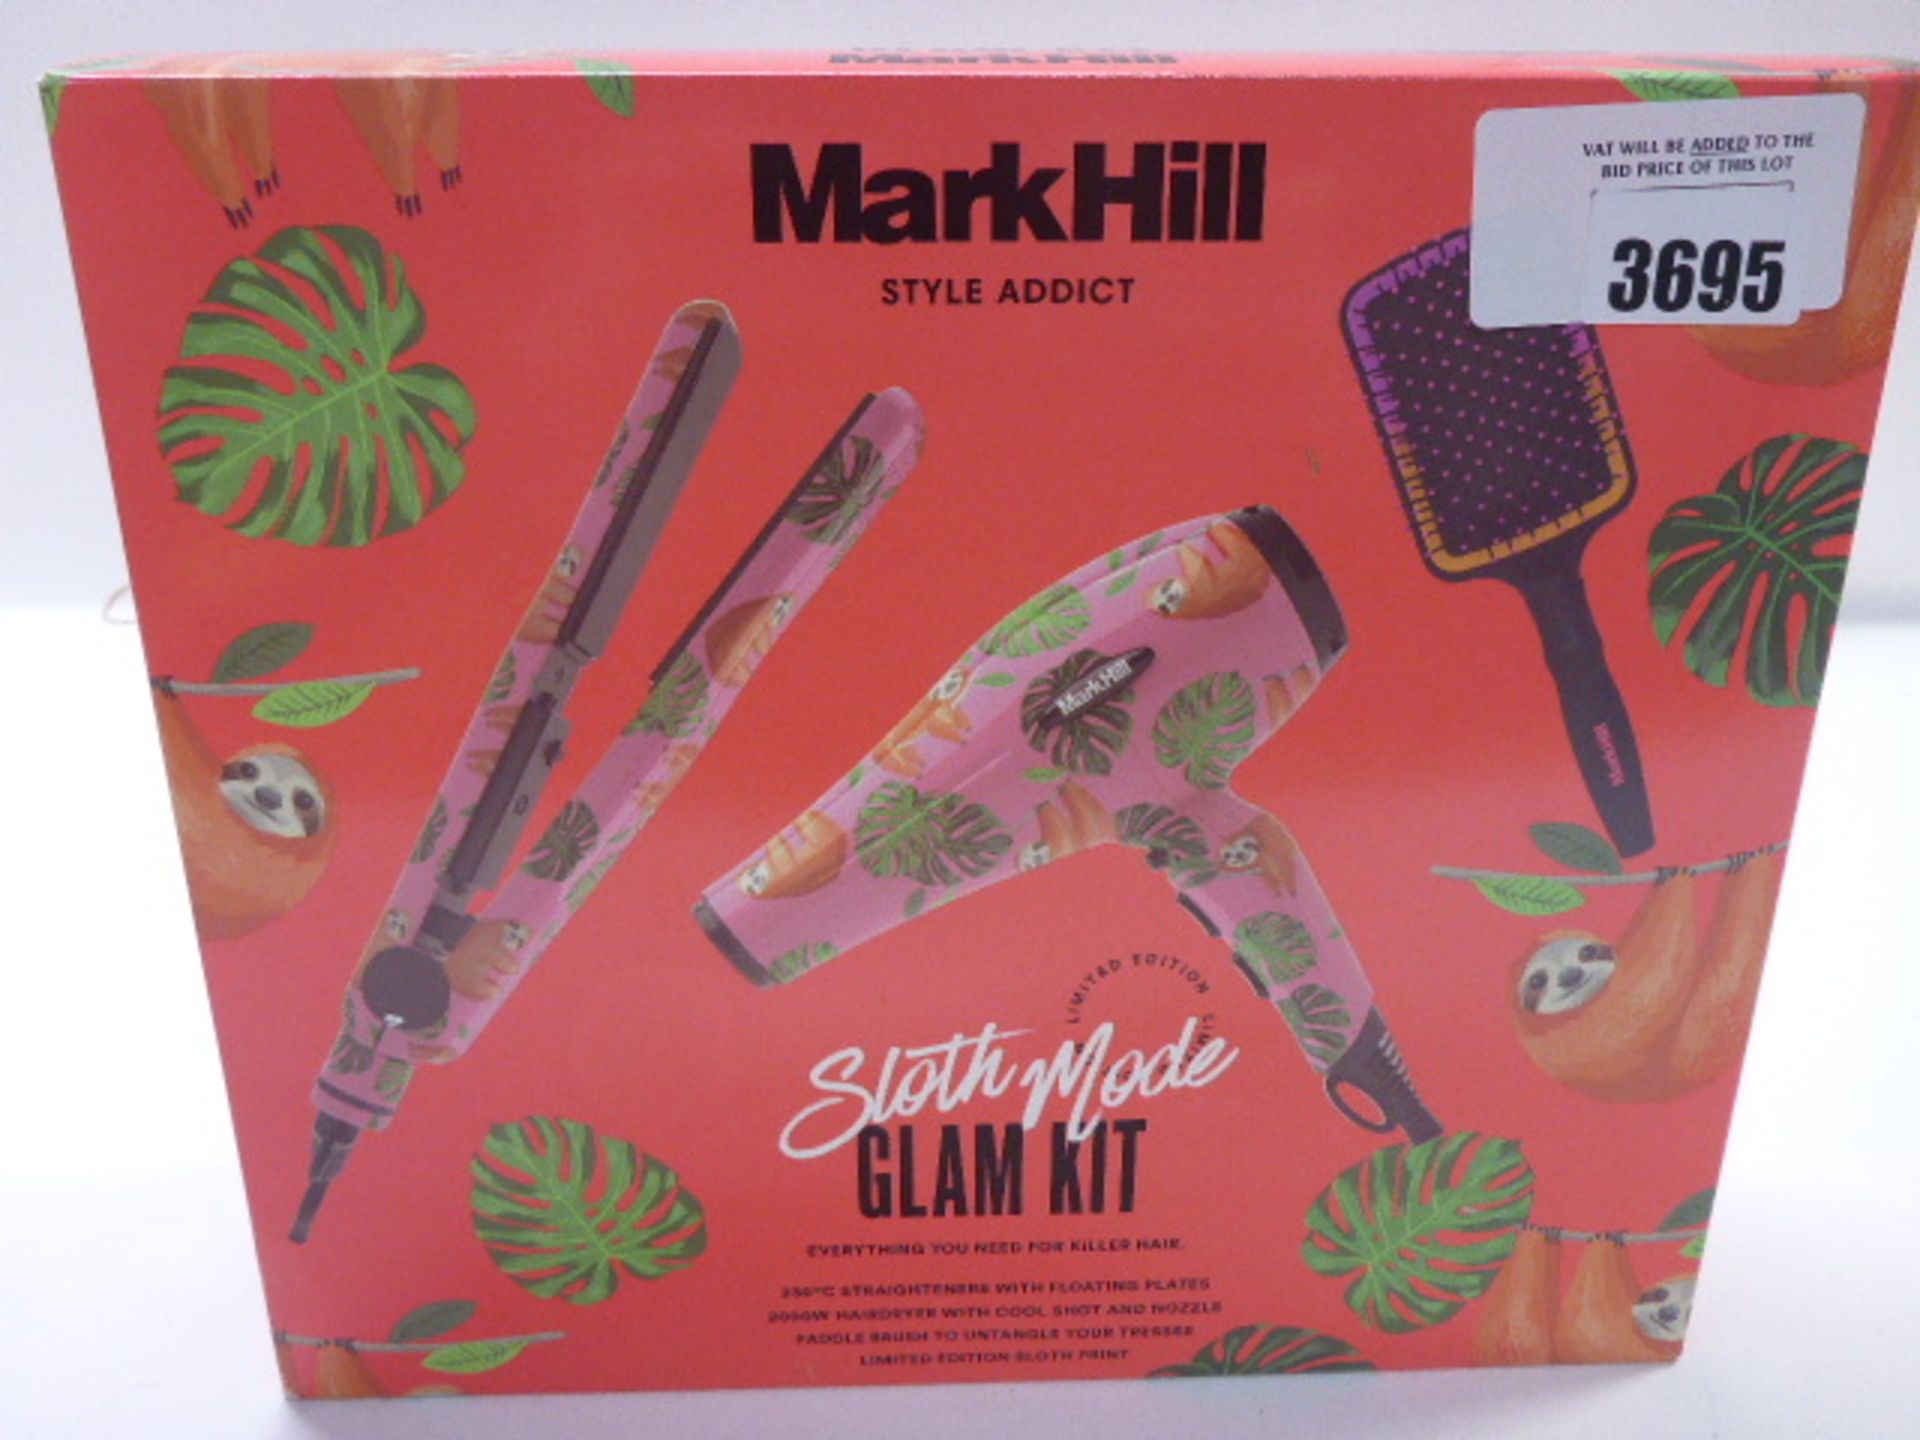 Mark Hill Style Addict Sloth Mode glam kit